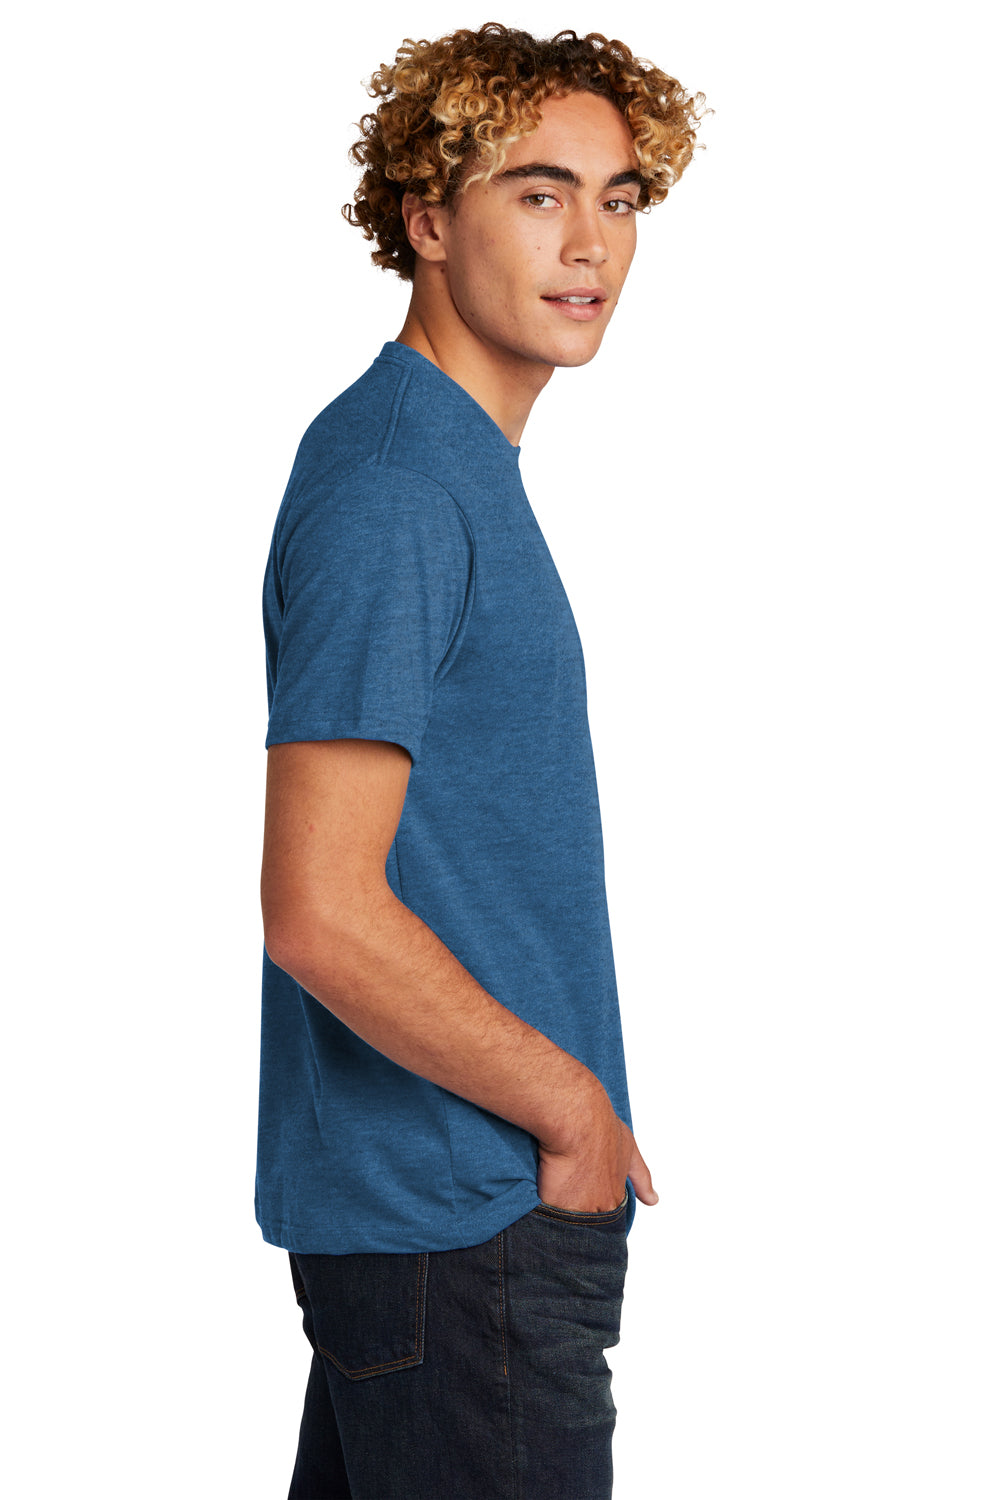 Ash & Erie Heather Blue Crew Neck T-Shirt for Short Men Heather Blue / XL